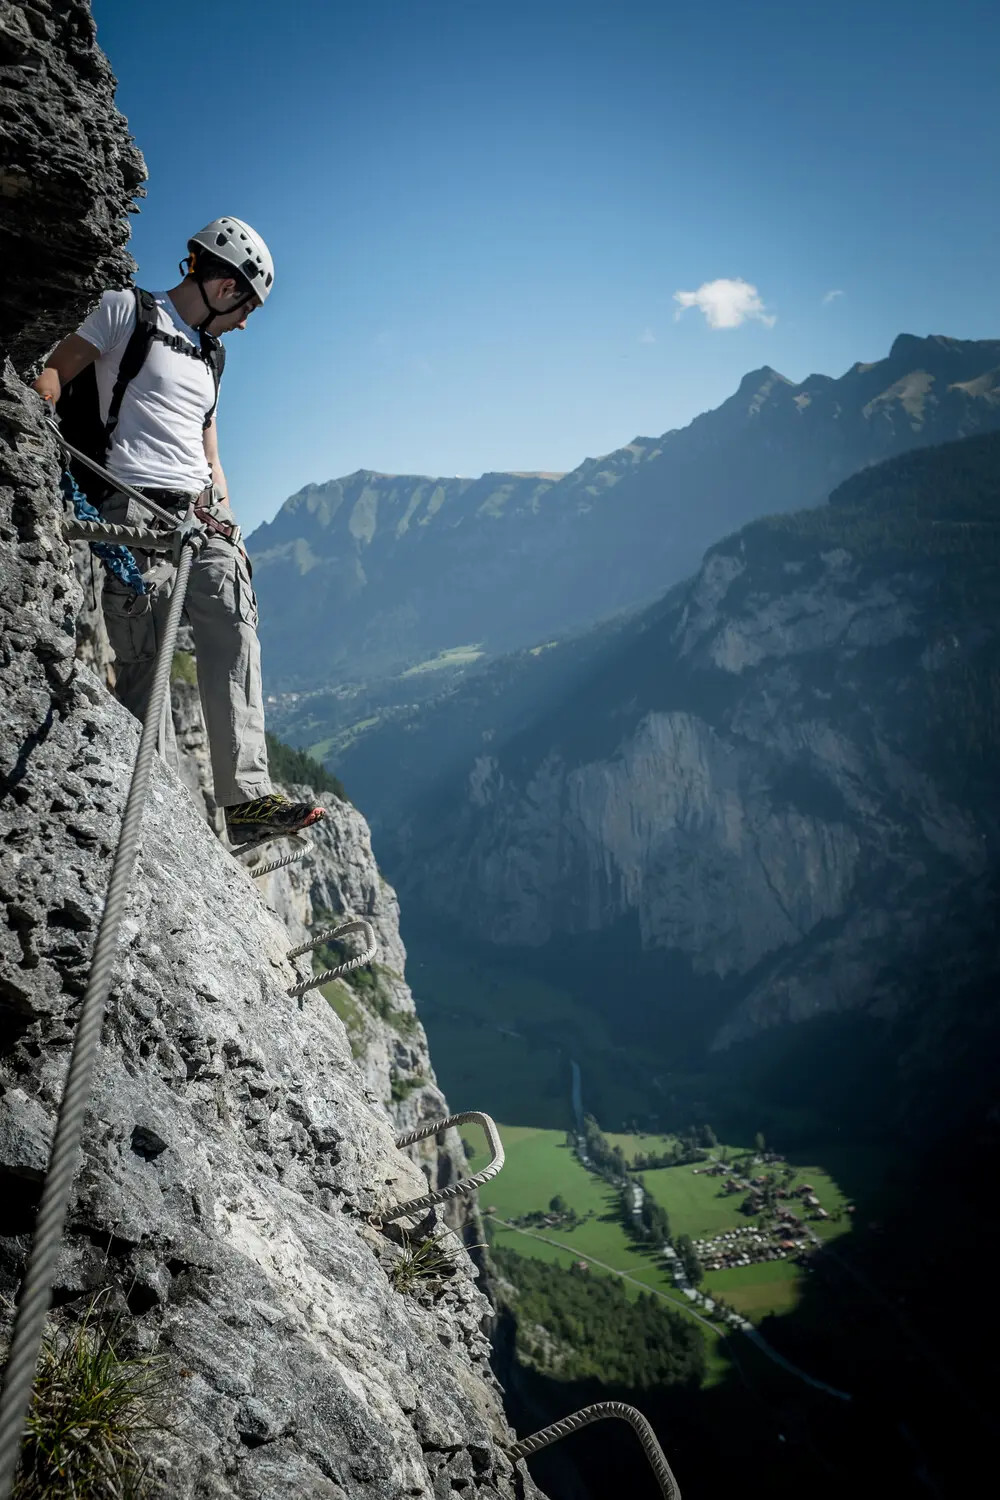 A man rock climbing in Switzerland